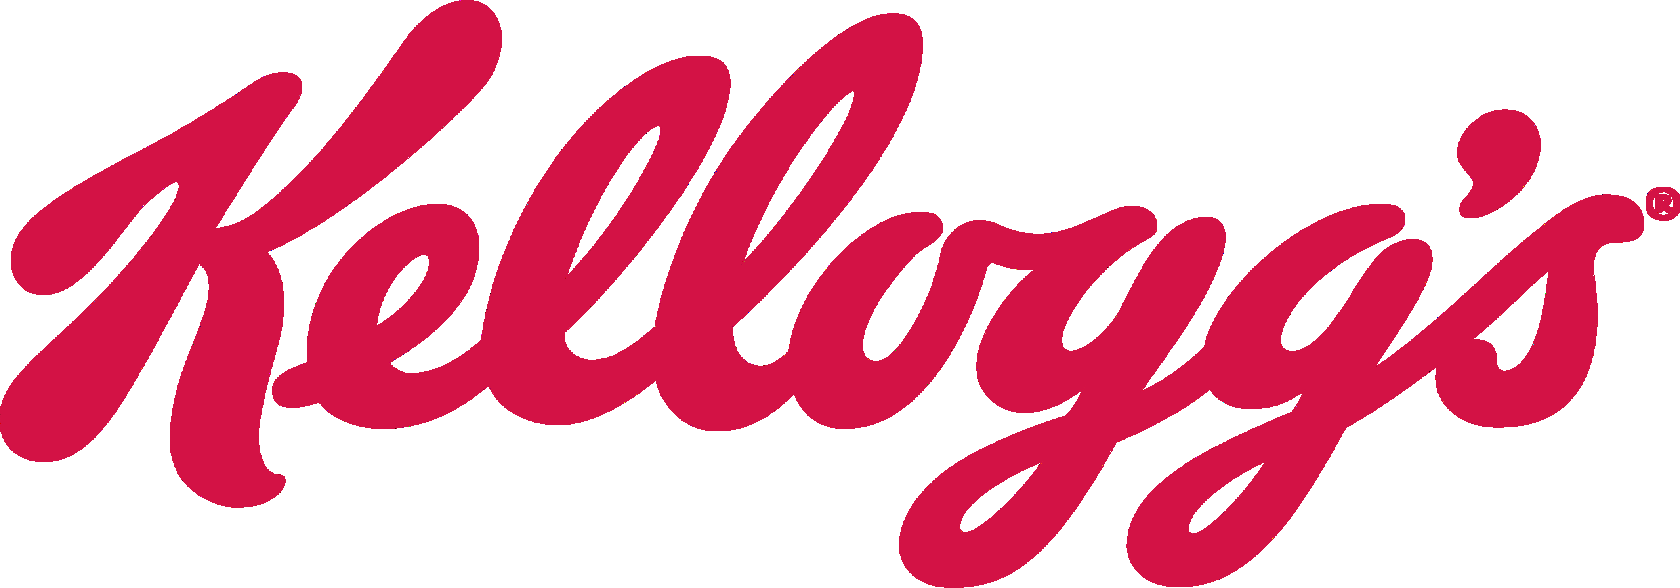 Logotipo Kellogg's